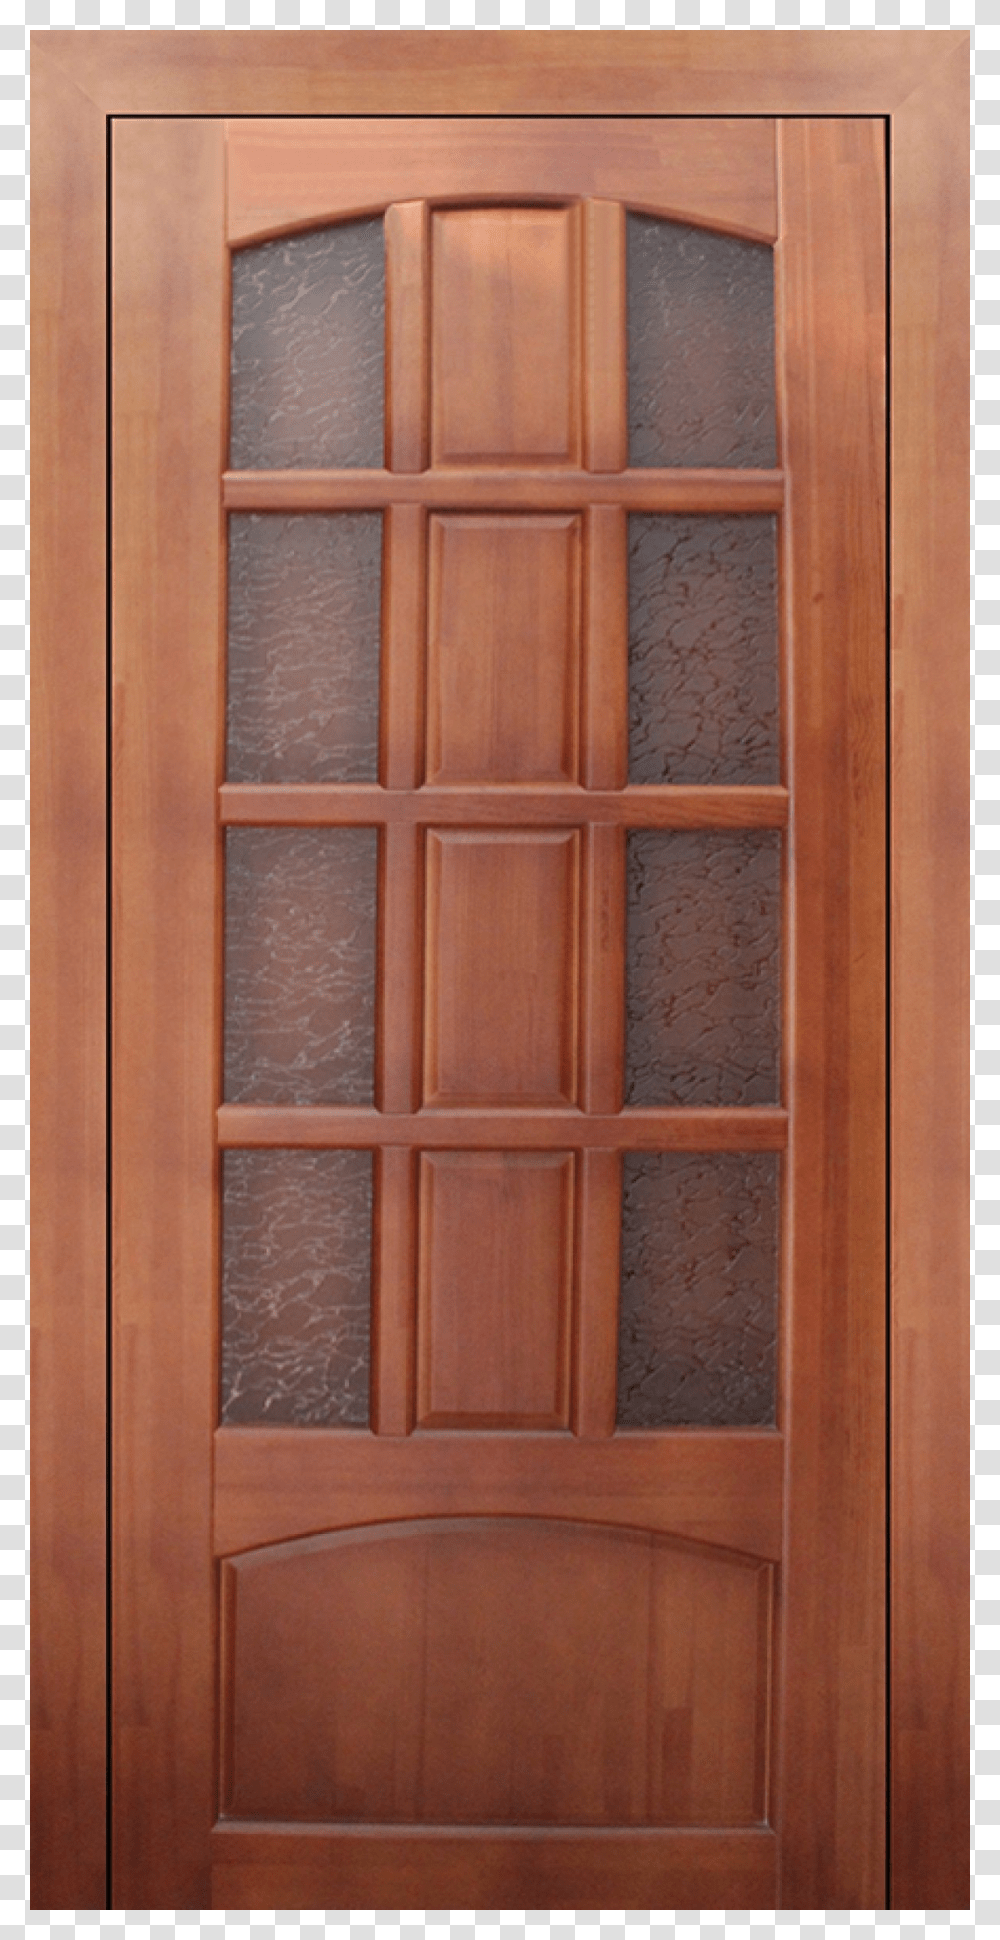 Furniture, Door, Wood, Hardwood Transparent Png